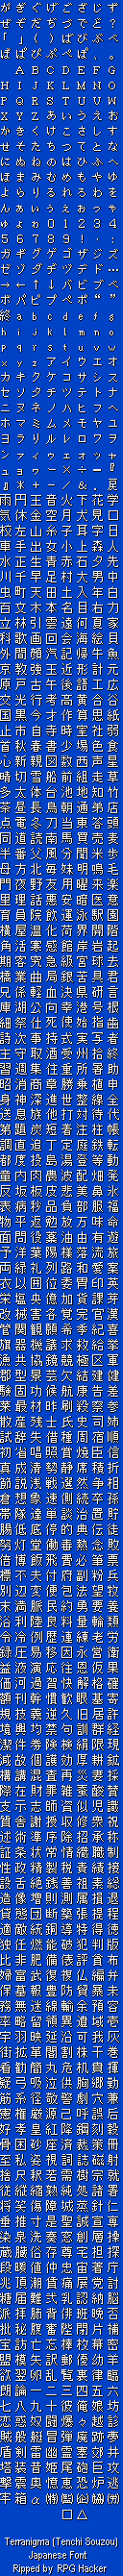 Terranigma - Font (Japanese)